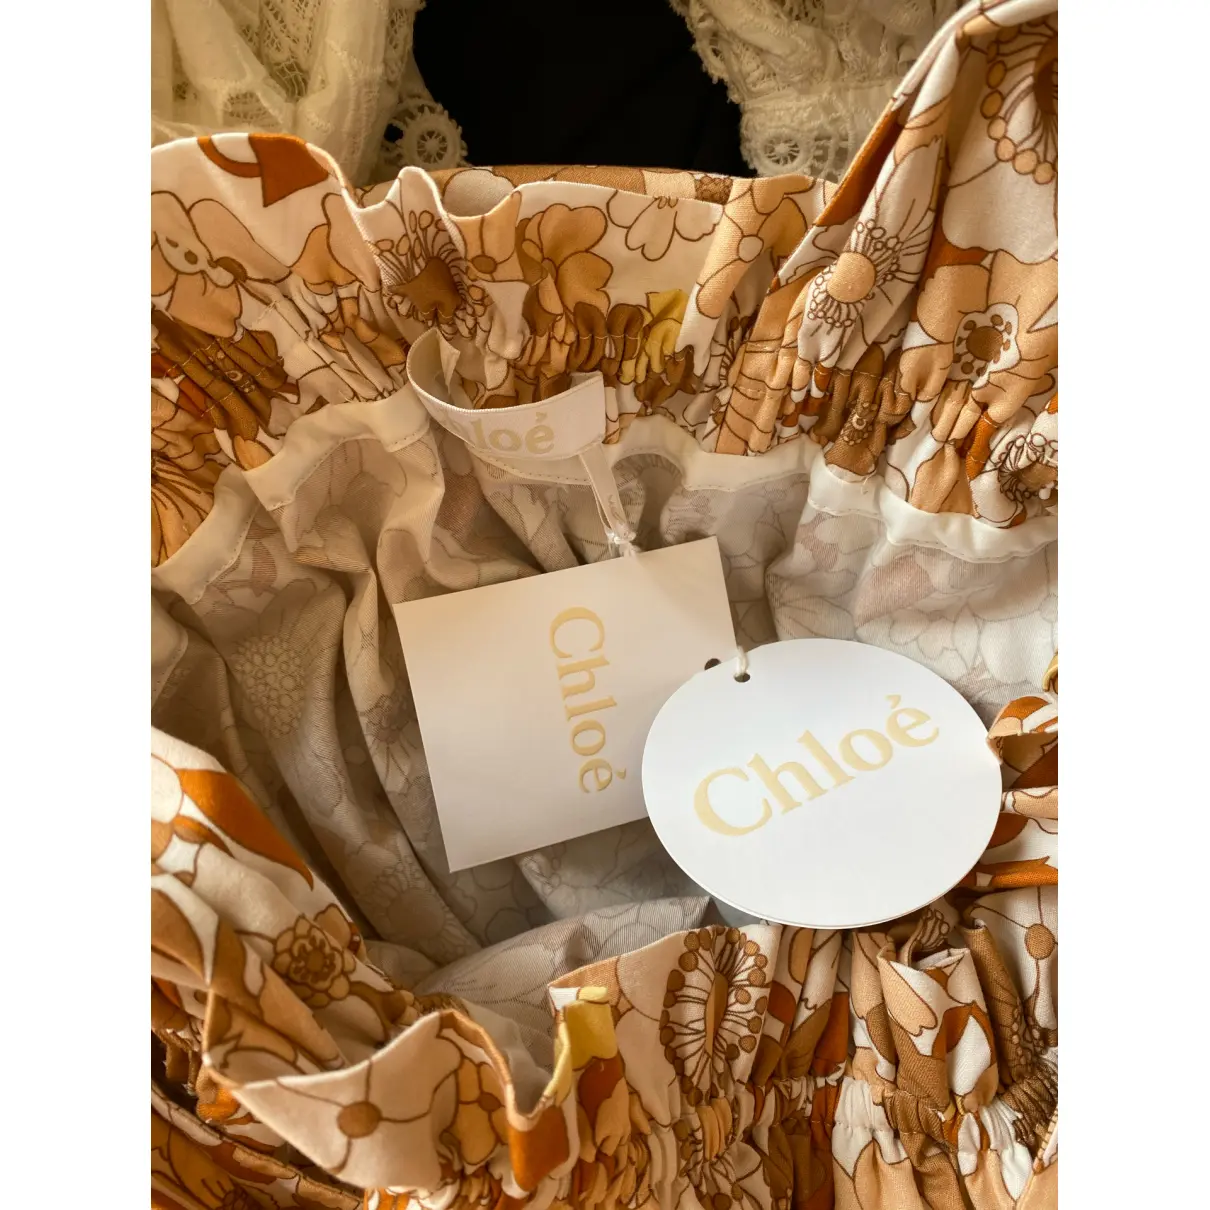 Buy Chloé Mid-length dress online